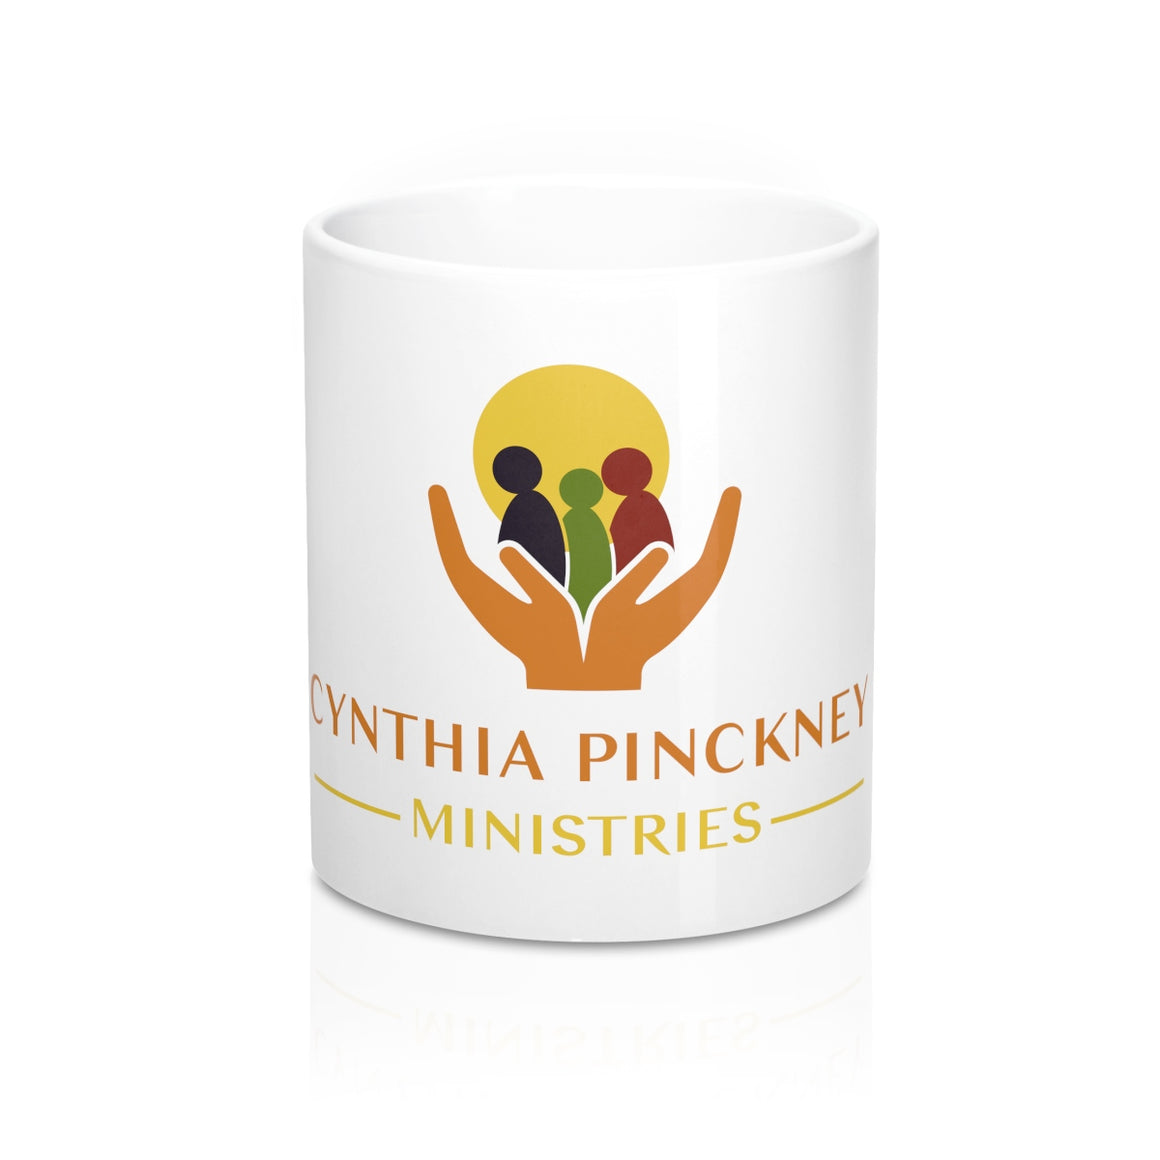 Cynthia Pinckney Ministries 11oz Mug